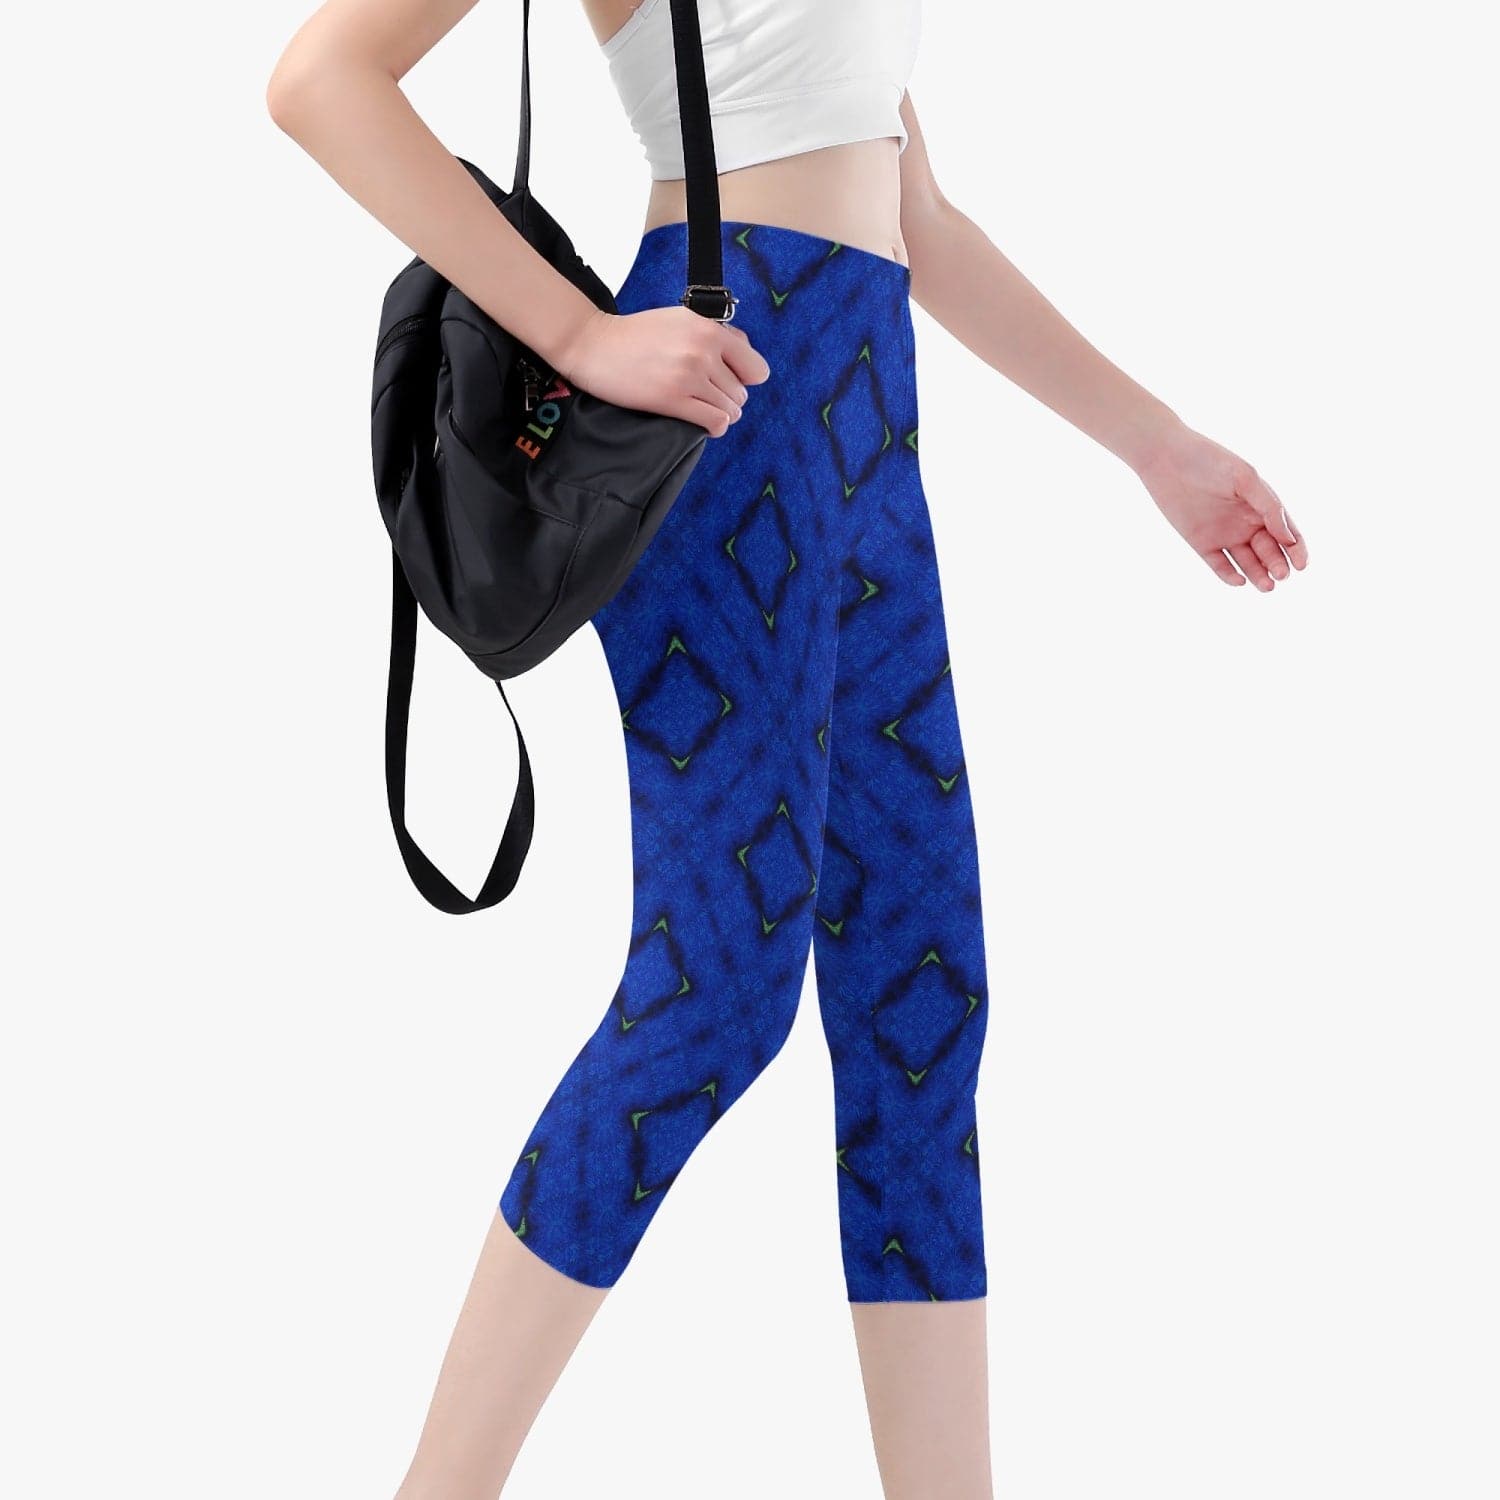 Indigo Third Eye Chacra  Short Type Yoga Pants, by Sensus Studio Design